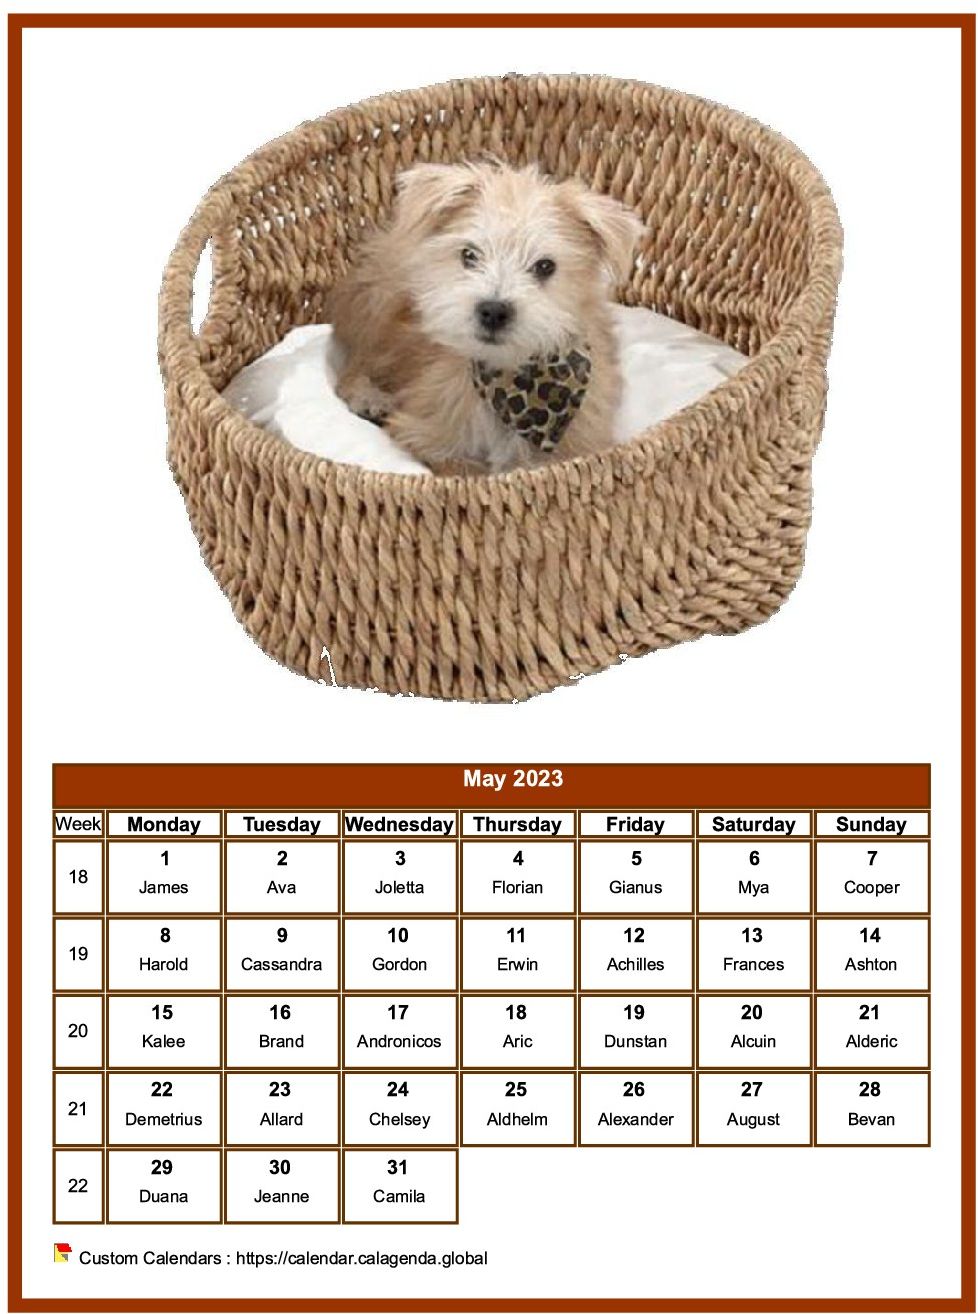 Calendar May 2023 dogs